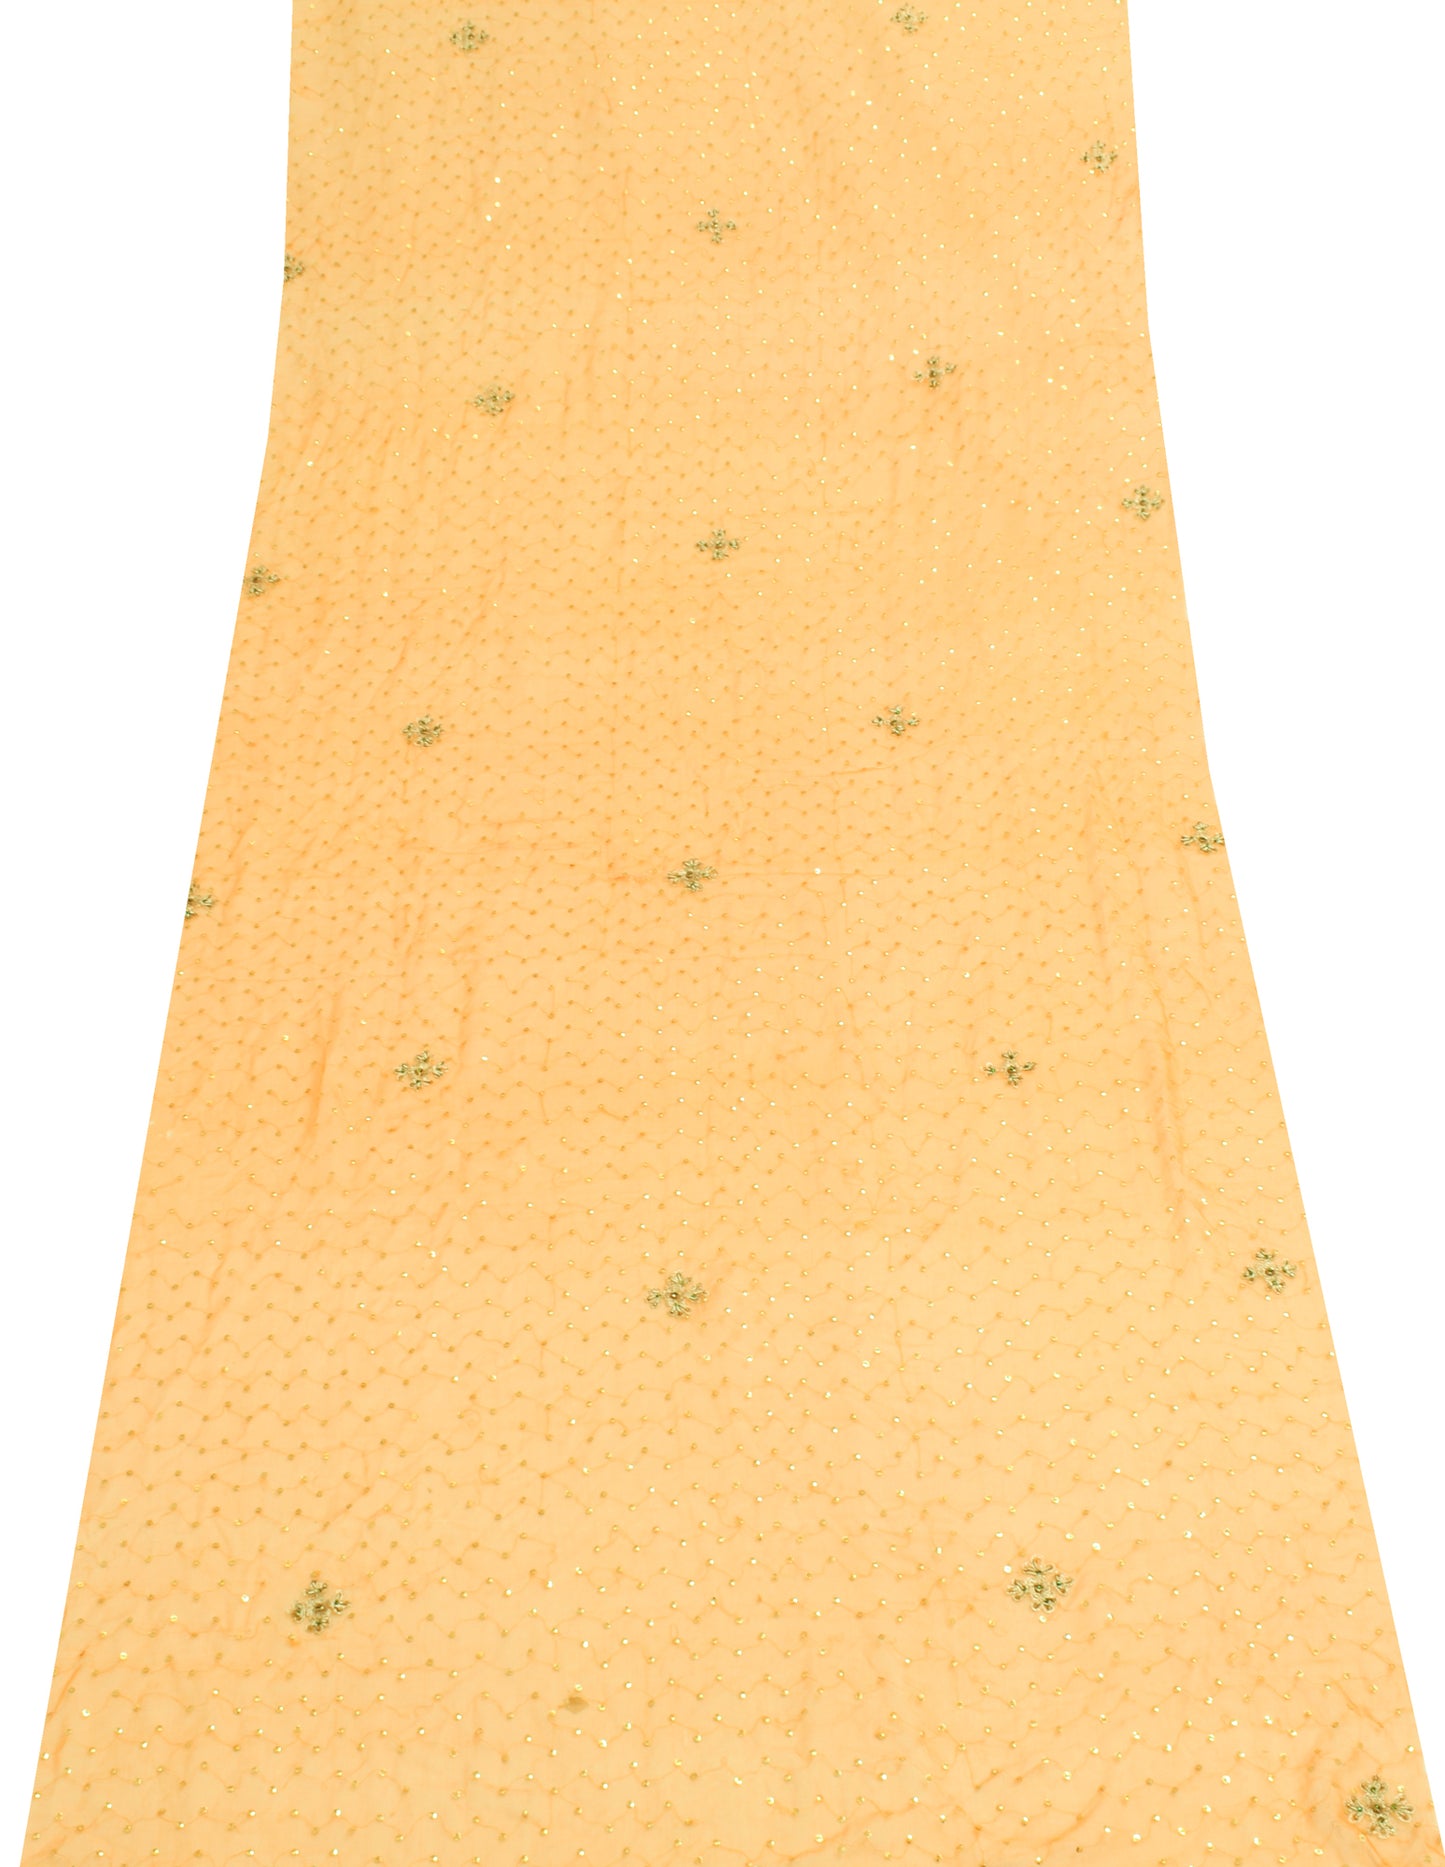 Sushila Vintage Orange Sari Remnant Scrap Chiffon Silk Hand Beaded Craft Fabric